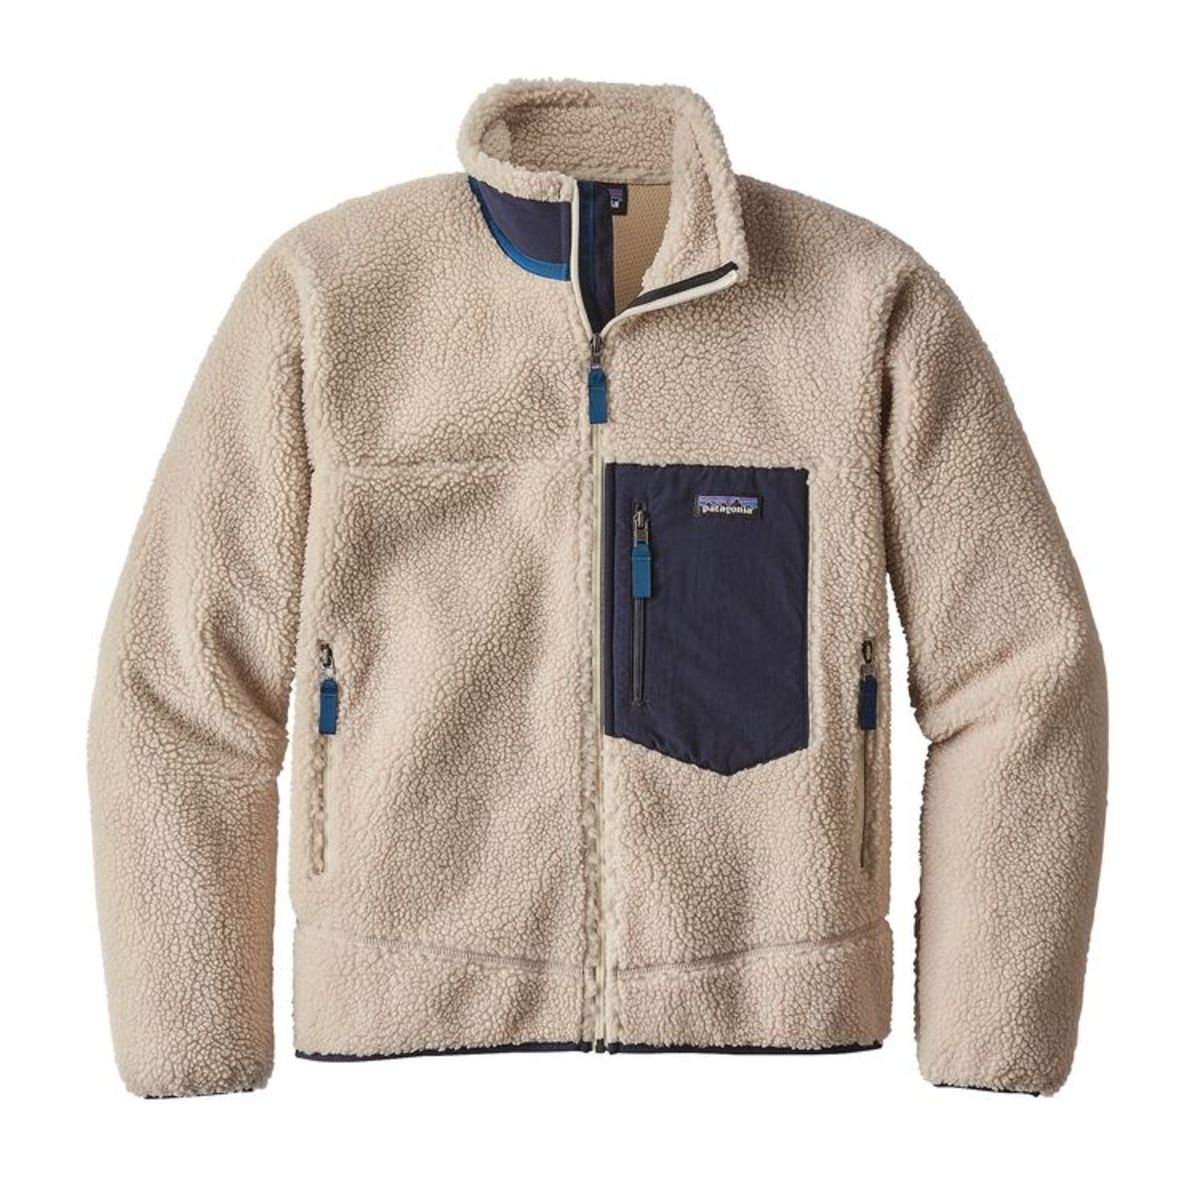 Patagonia Men's classic x-retro fleece jacket, $199, available here.